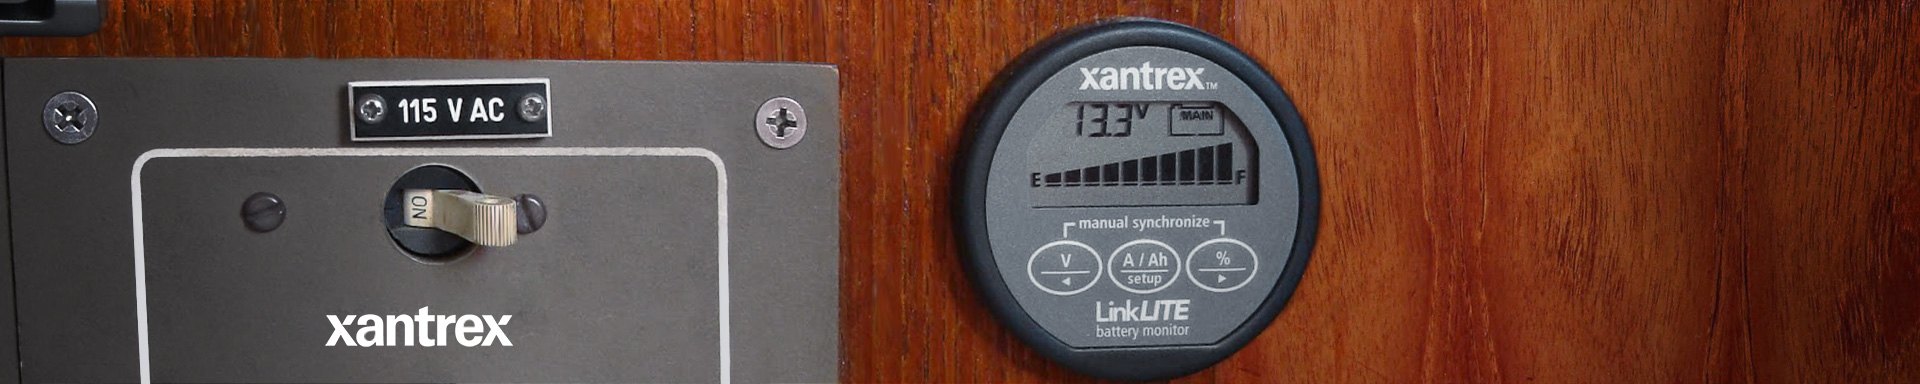 Xantrex Boat Solar Systems